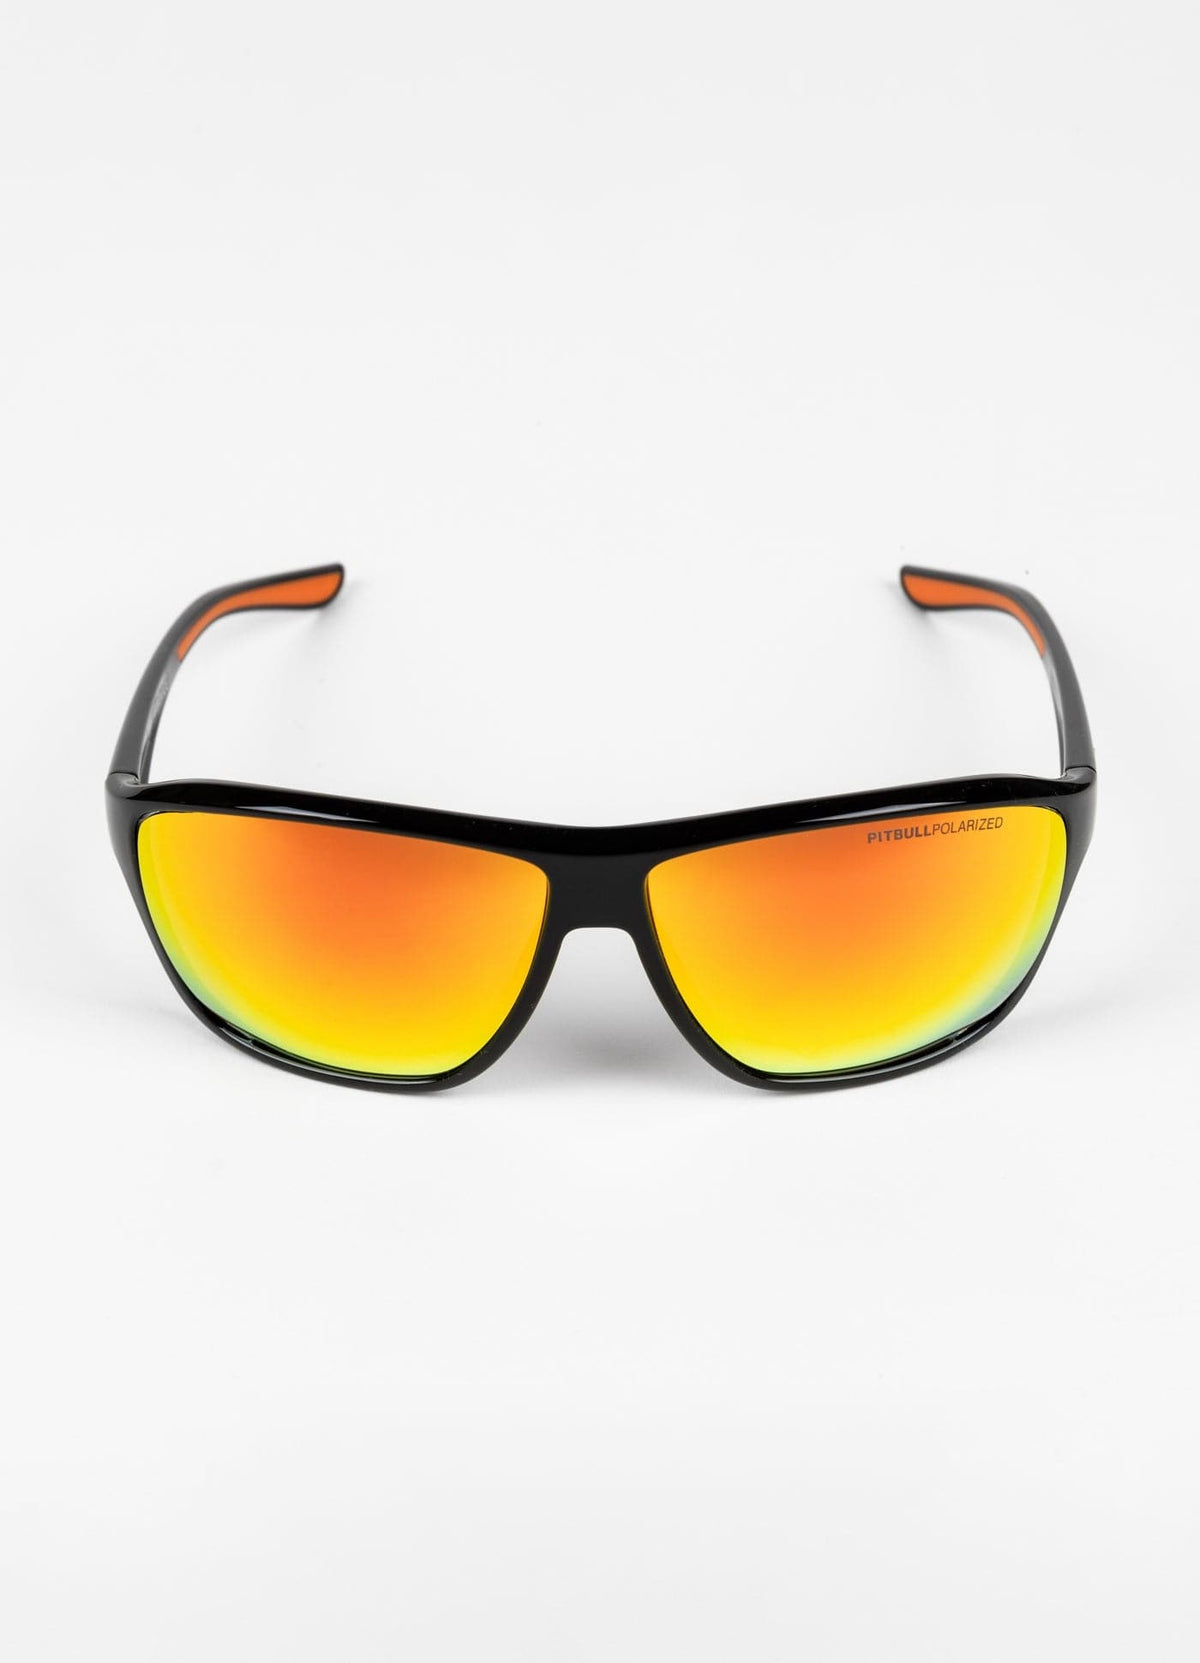 JAYKEN Orange Sunglasses